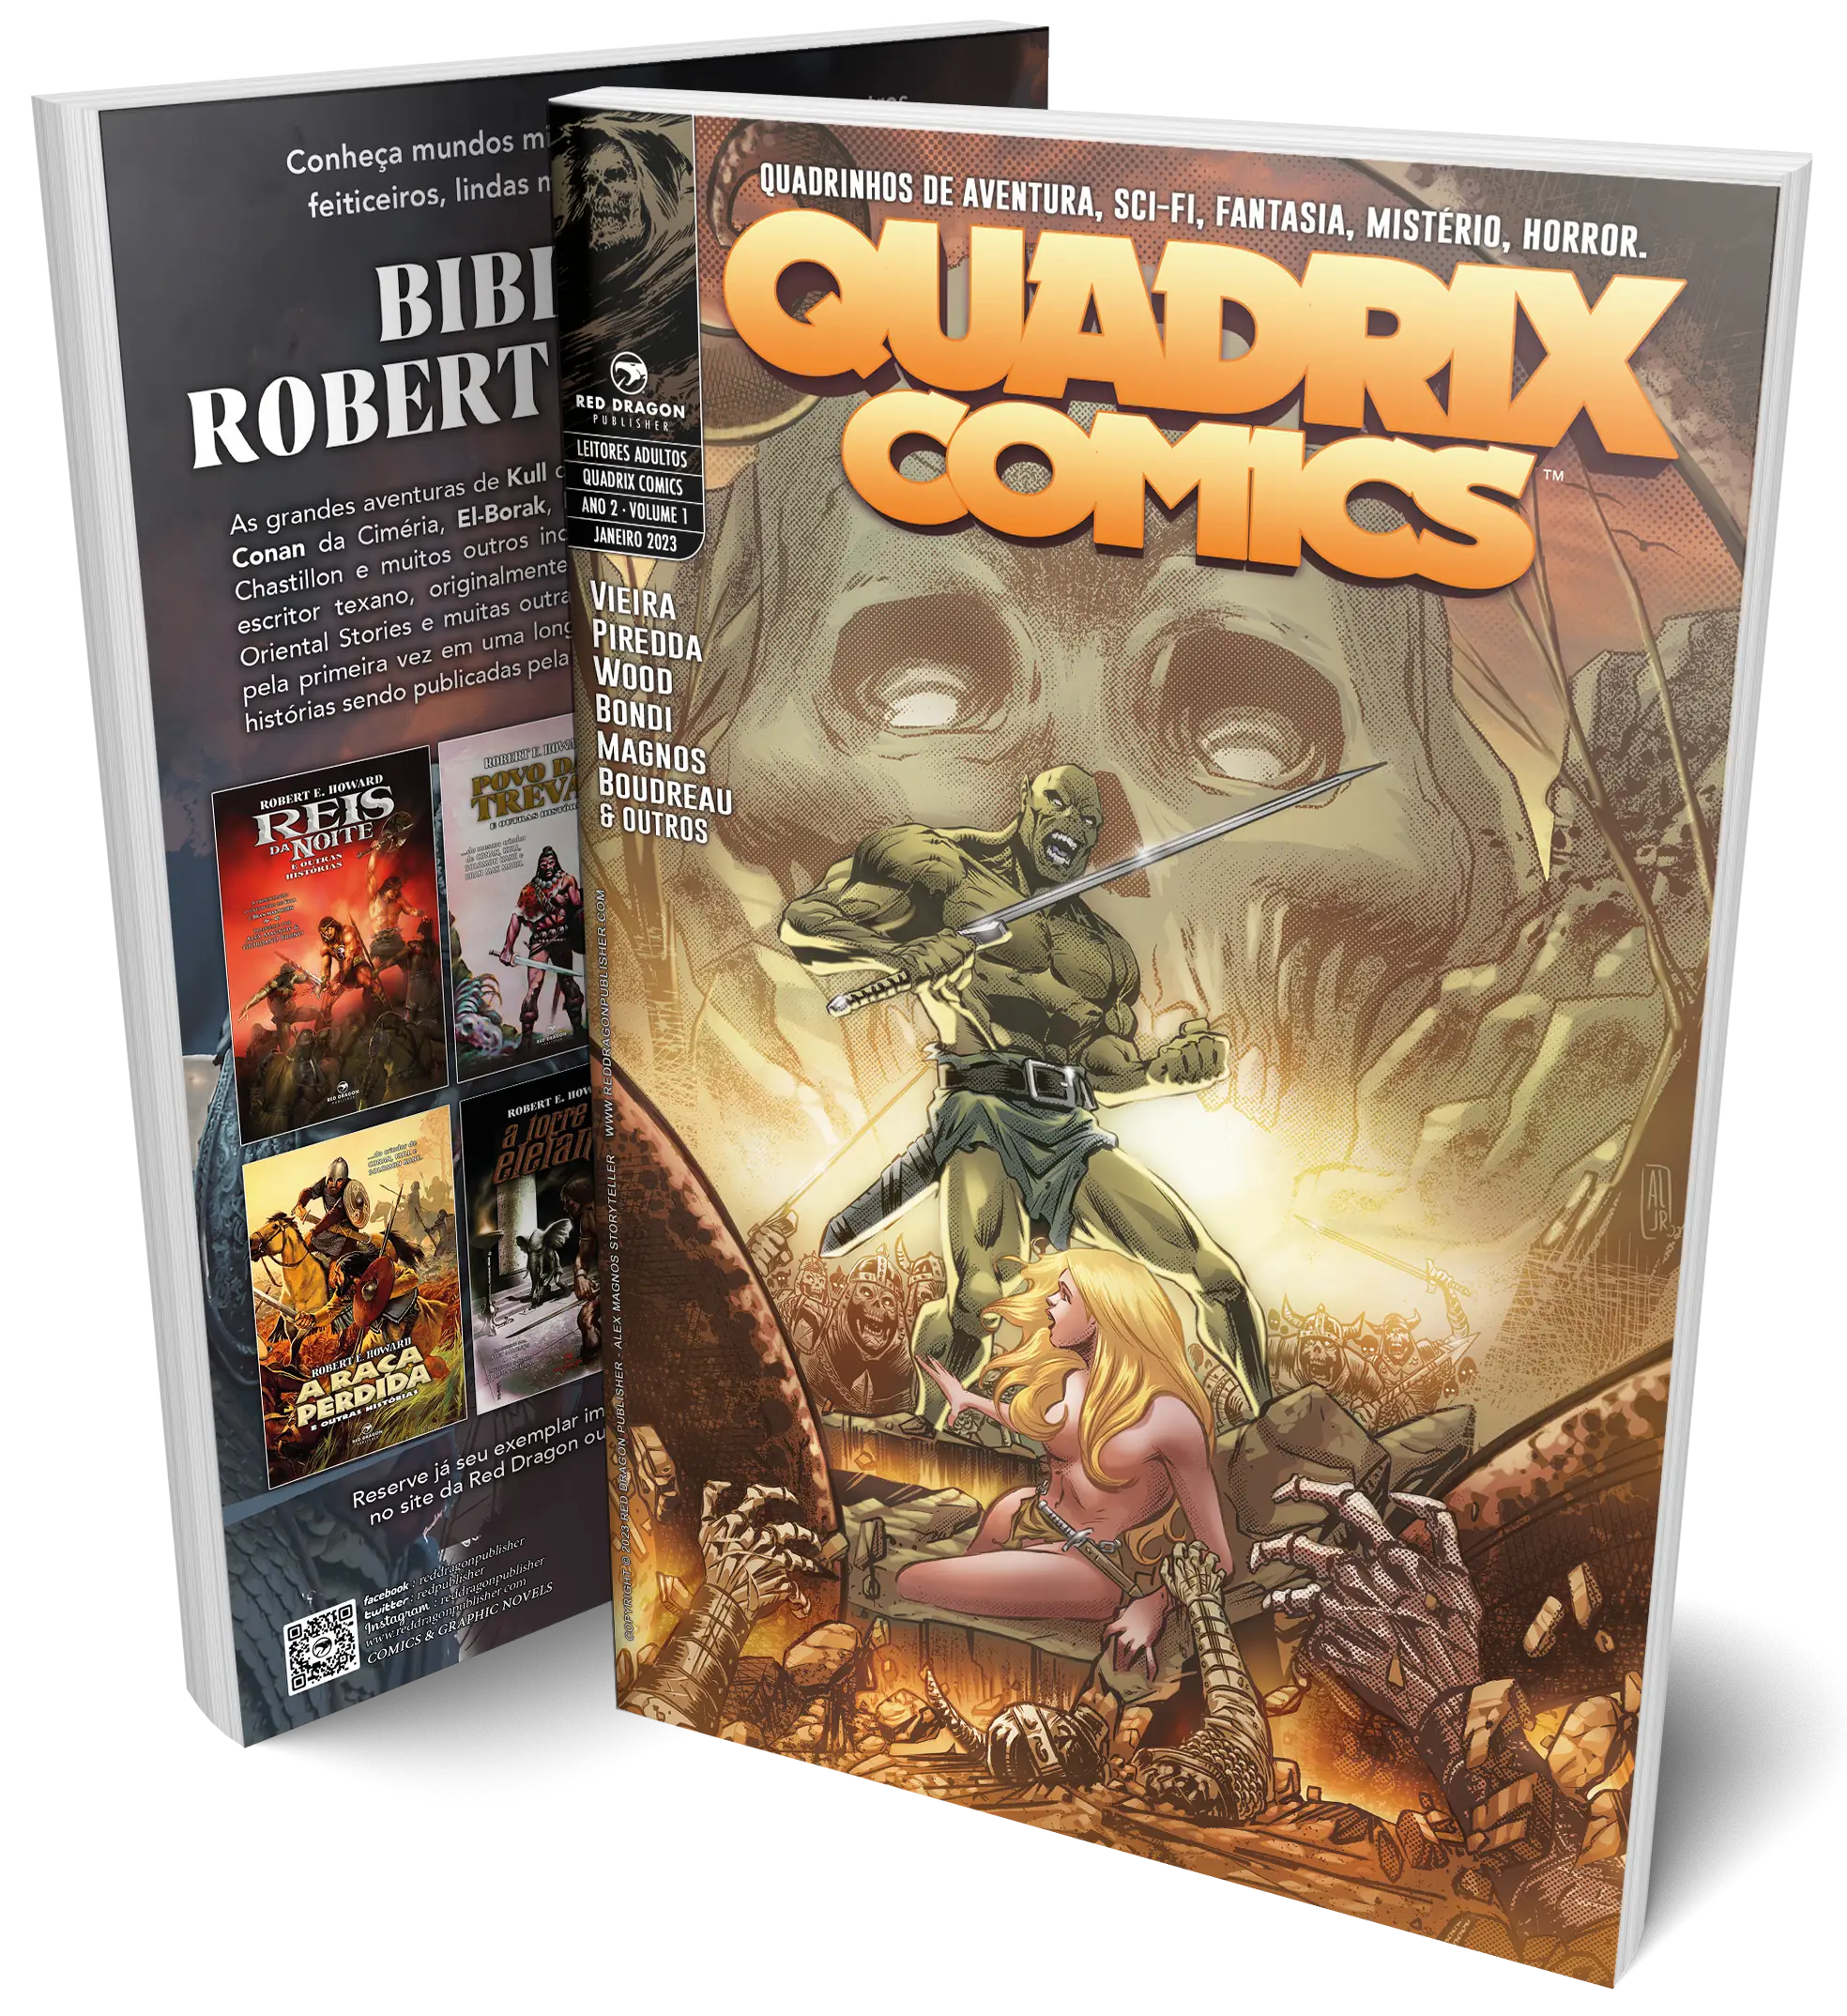 Quadrinhos - Red Dragon Publisher